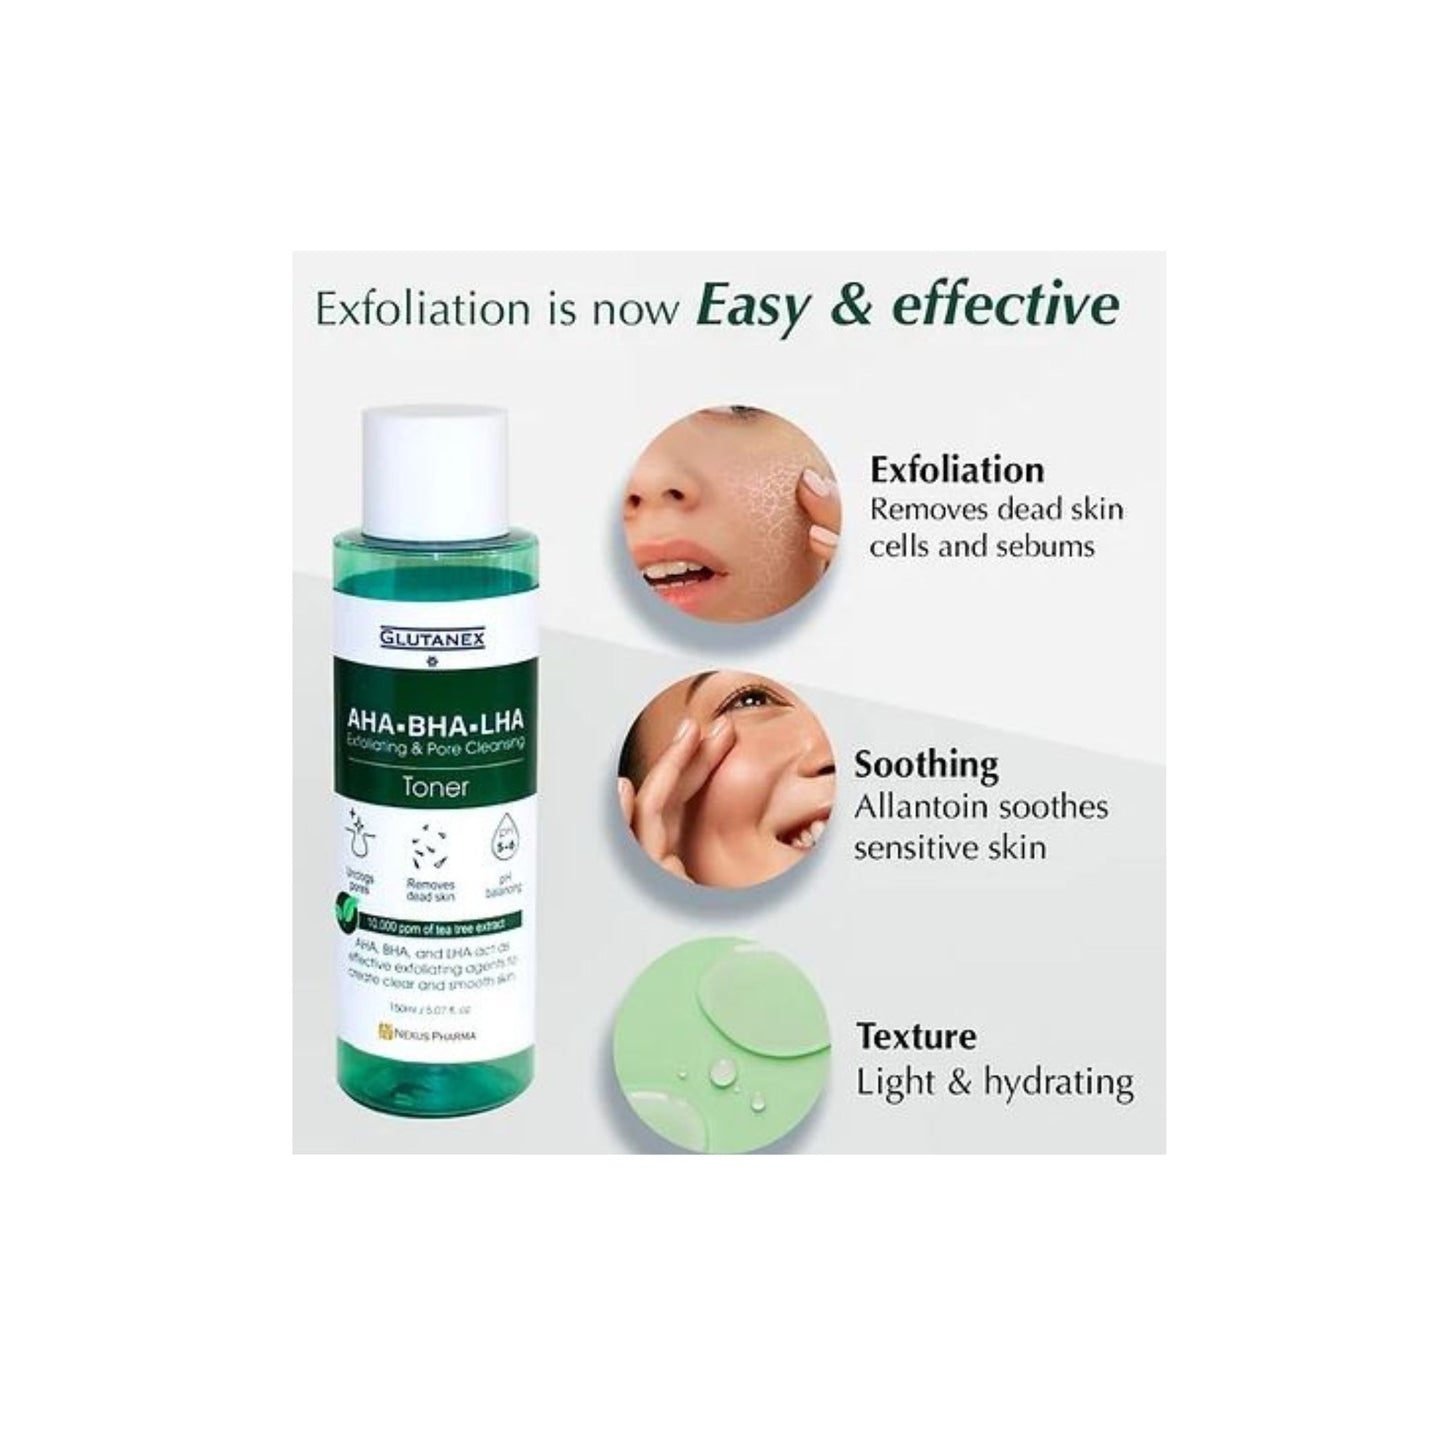 Glutanex AHA-BHA-LHA Exfoliating & Pore Cleansing Toner